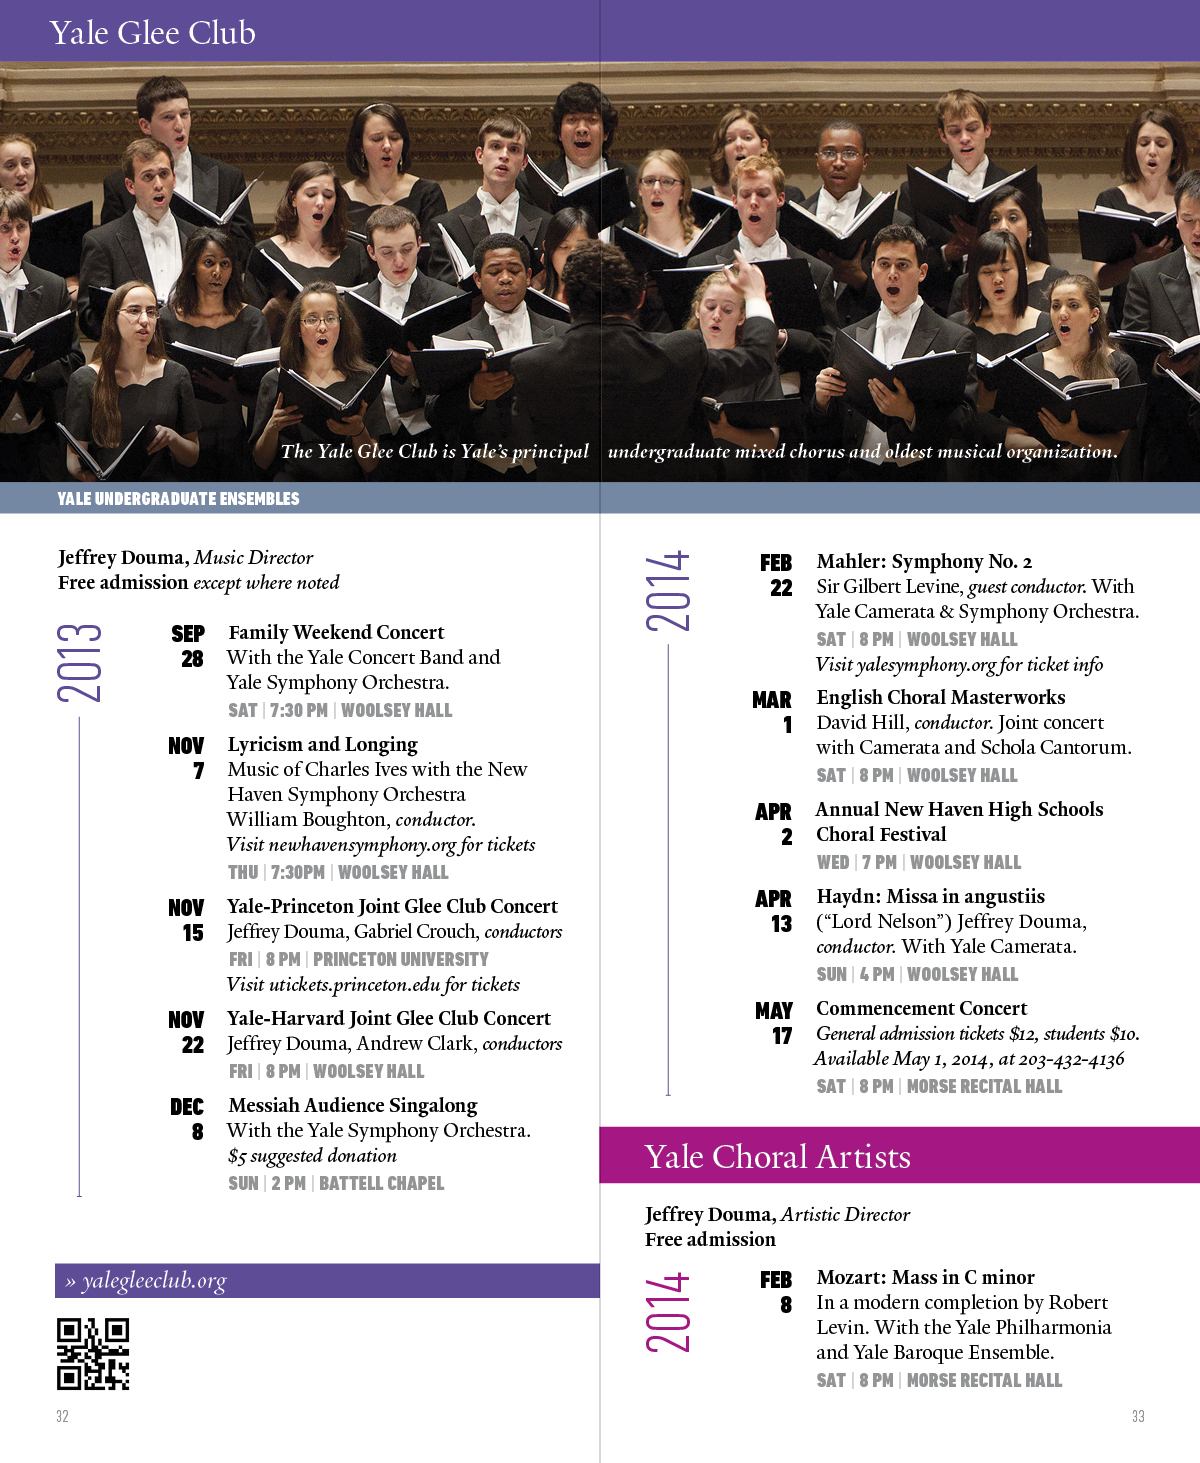 Music at Yale University Season Program / Schedule / Calendar by Granite Bay Graphic Design